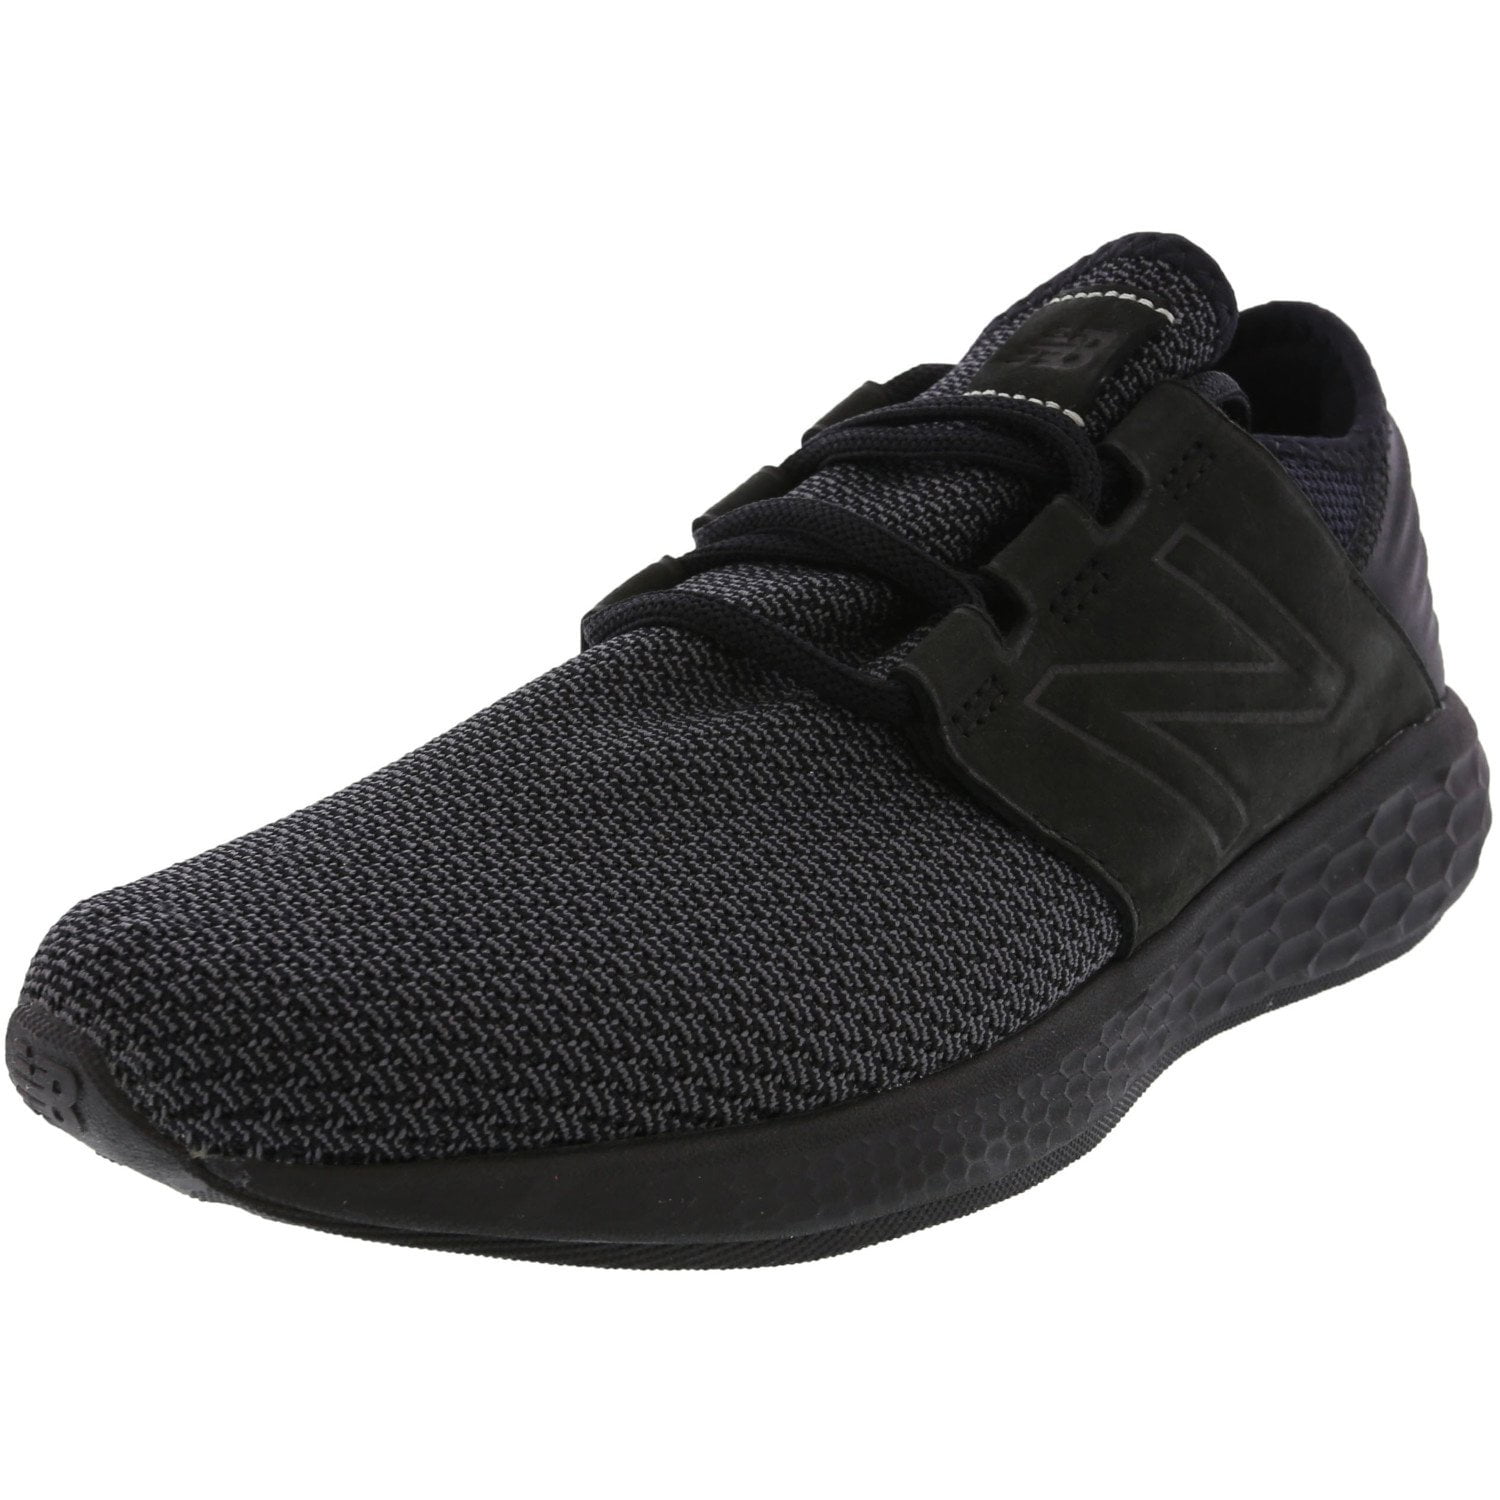 New Balance Men's Fresh Foam Cruz v2 Nubuck Shoes Black with Grey ...